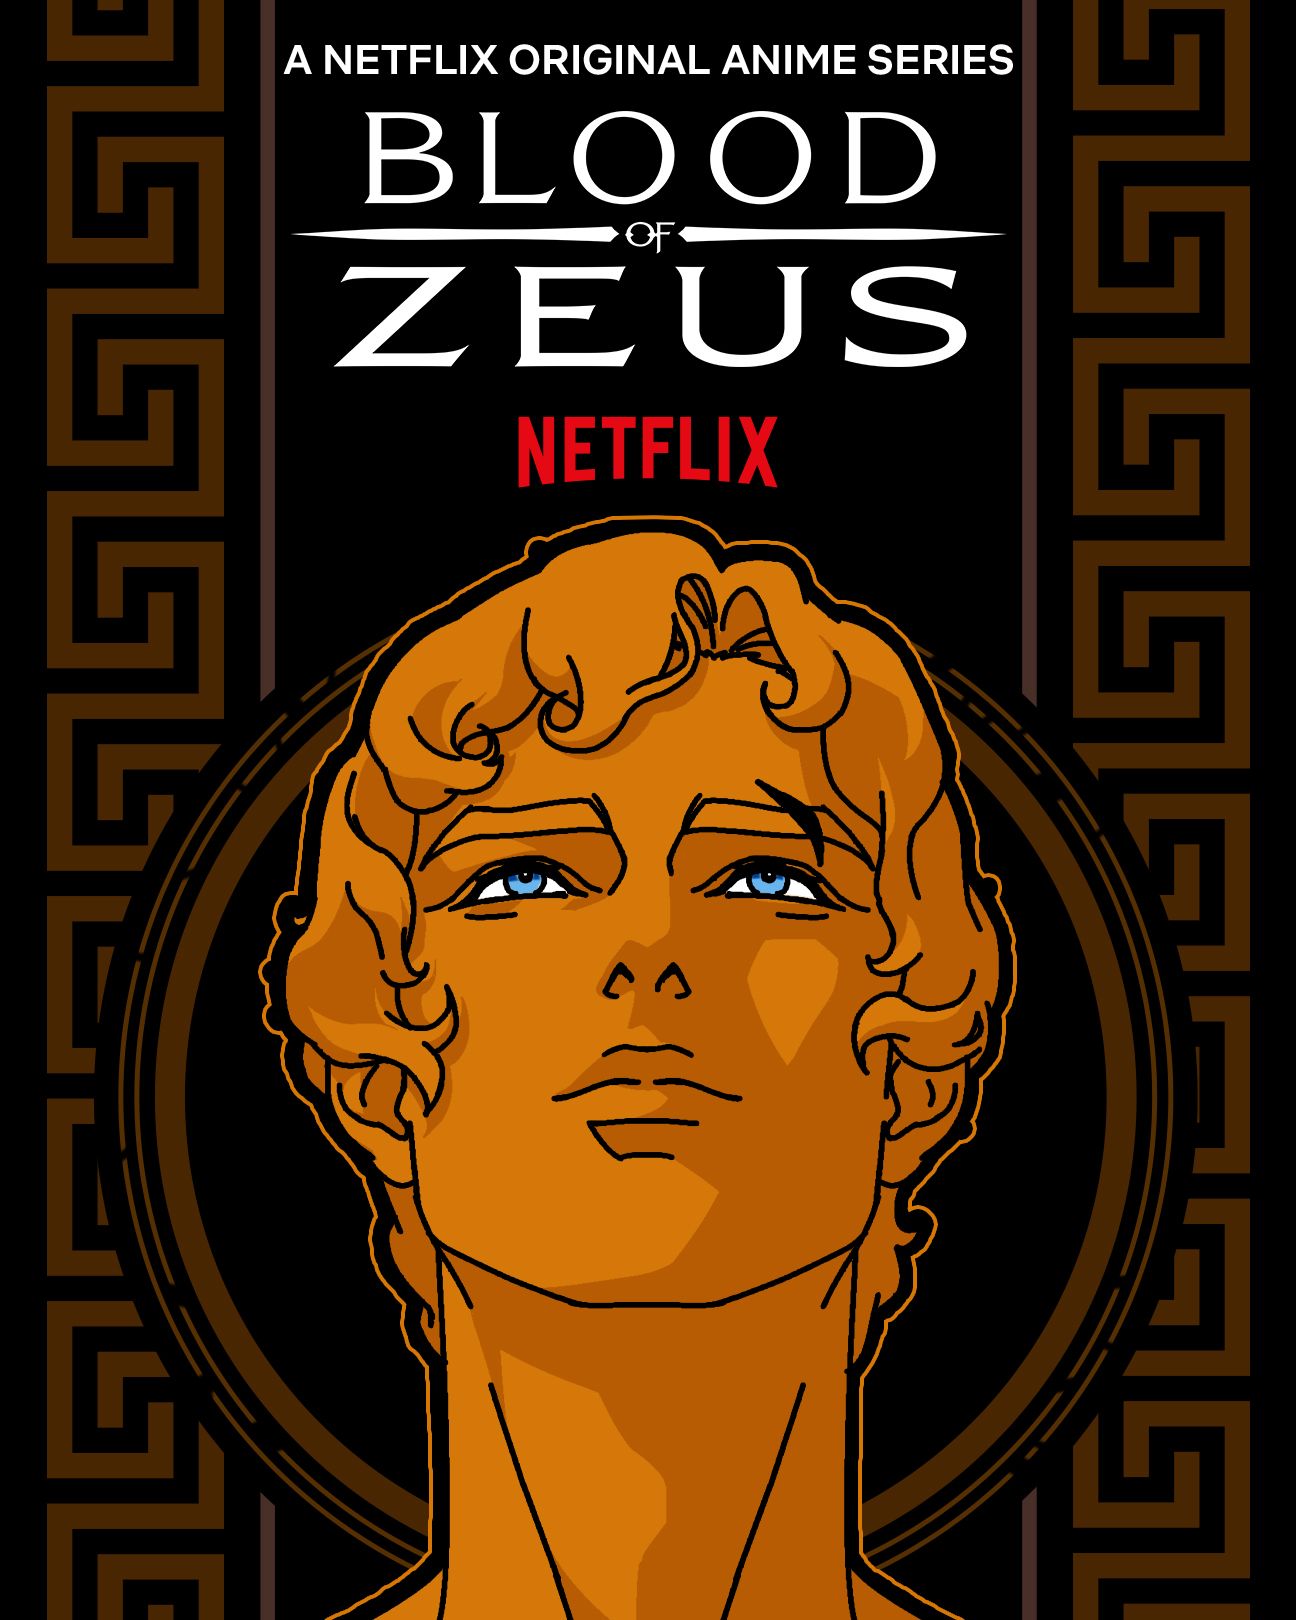 Zeus wallpaper by ilikedetectives  Download on ZEDGE  856d